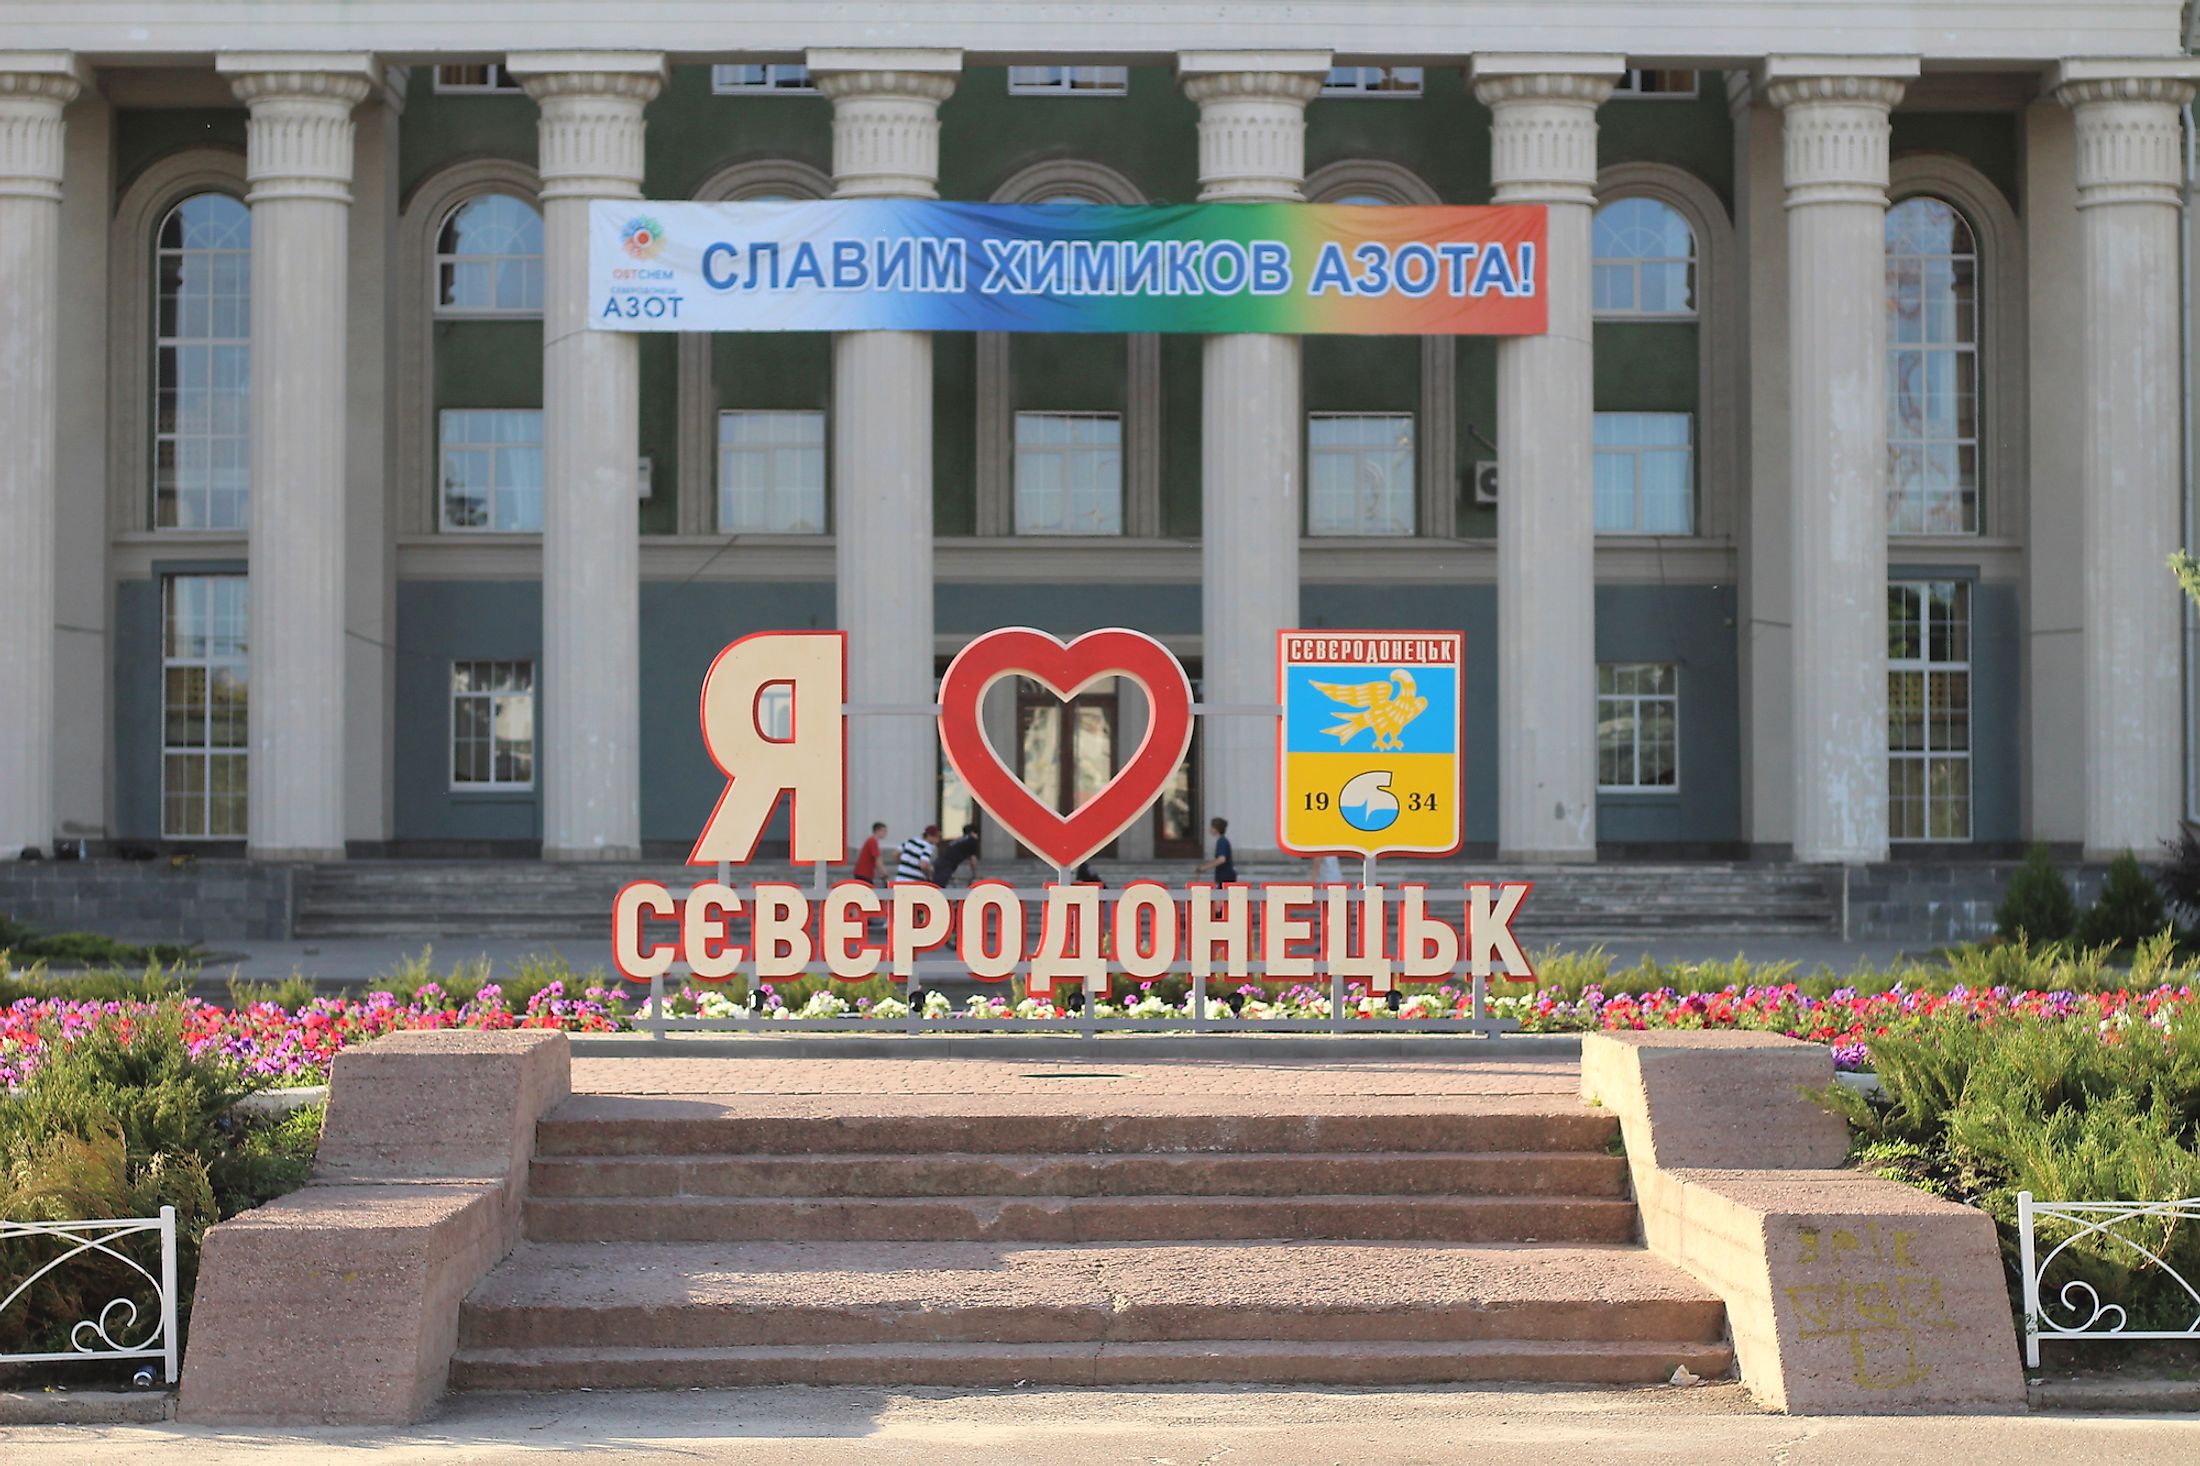 Sieverodonetsk, Ukraine. Editorial credit: PeterPike / Shutterstock.com